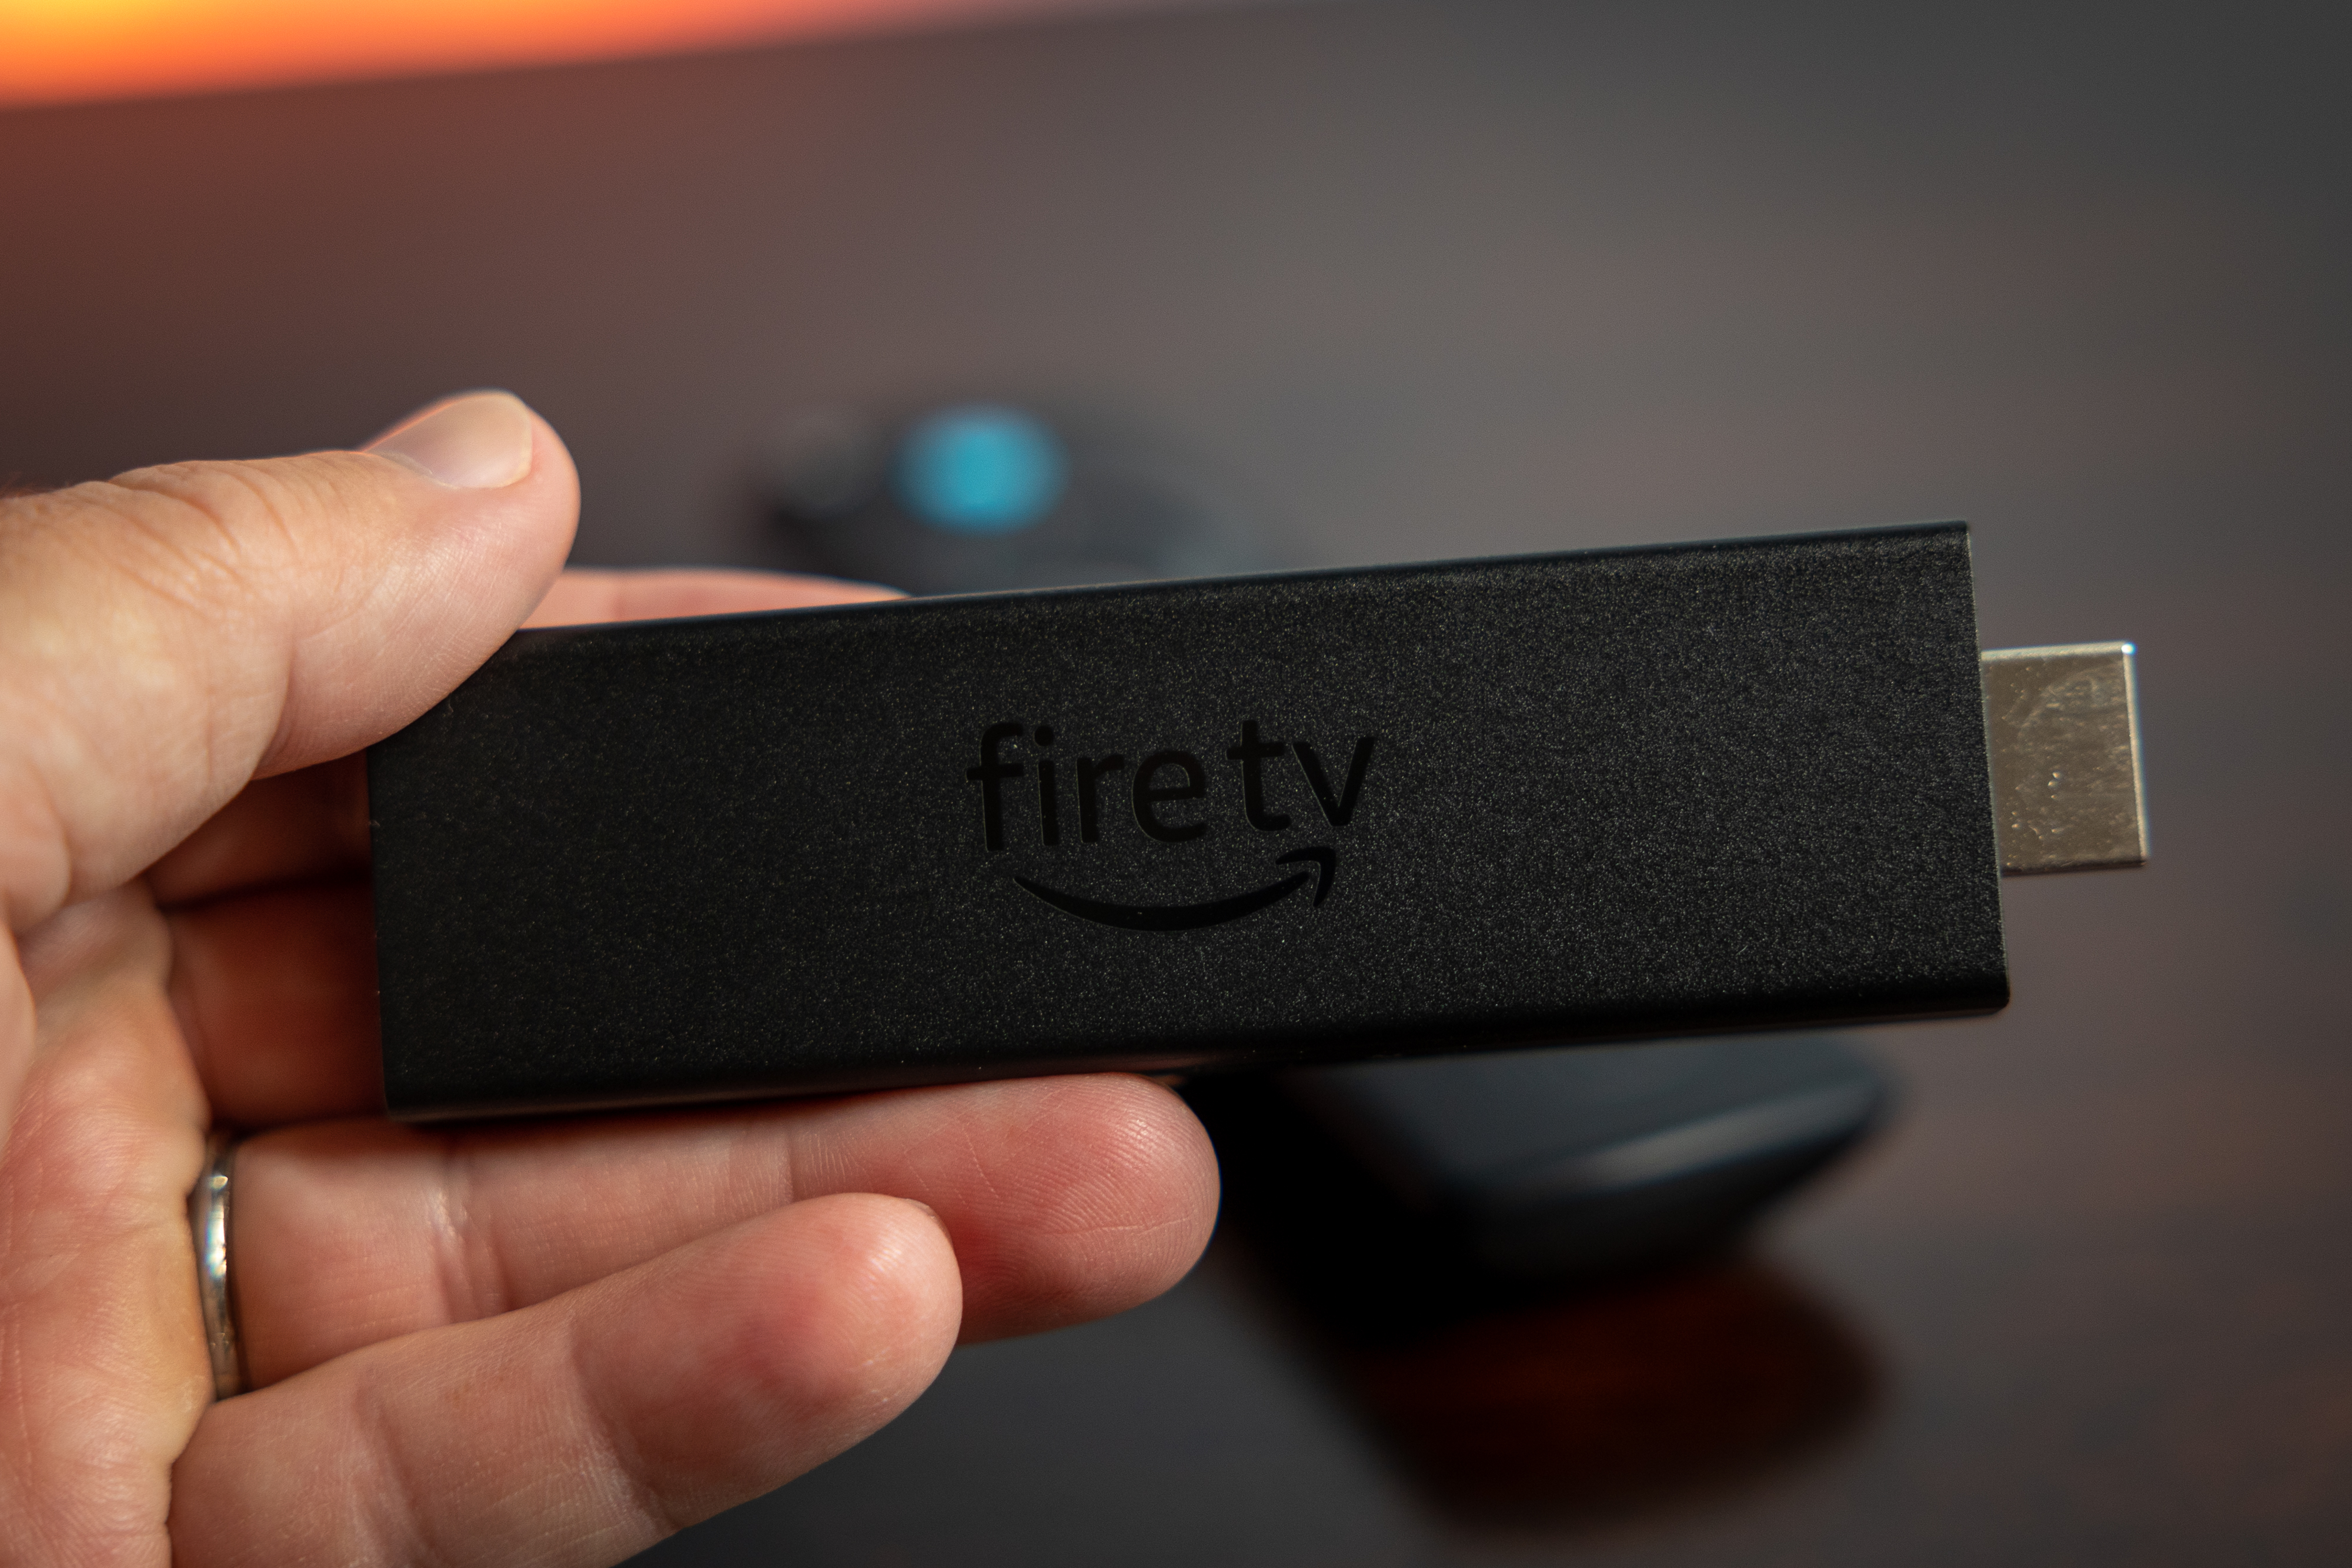 Fire TV Stick 4K Streaming Device in Black